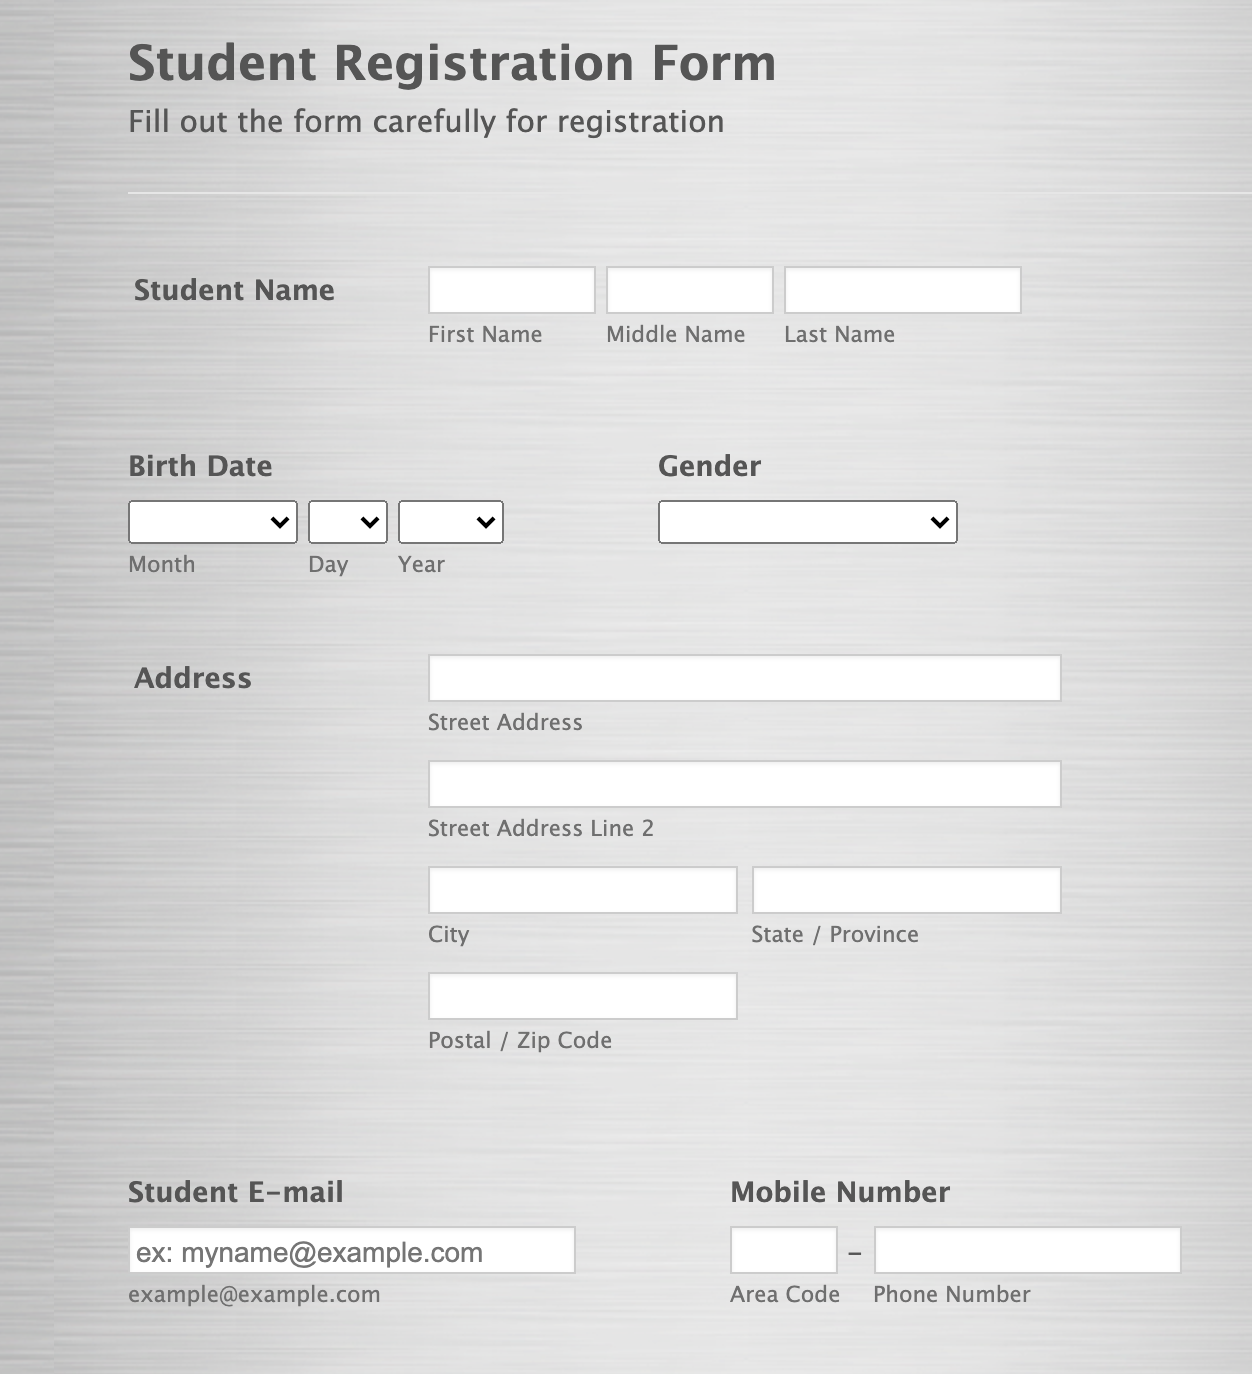 Jotform's Student Registration Form Template